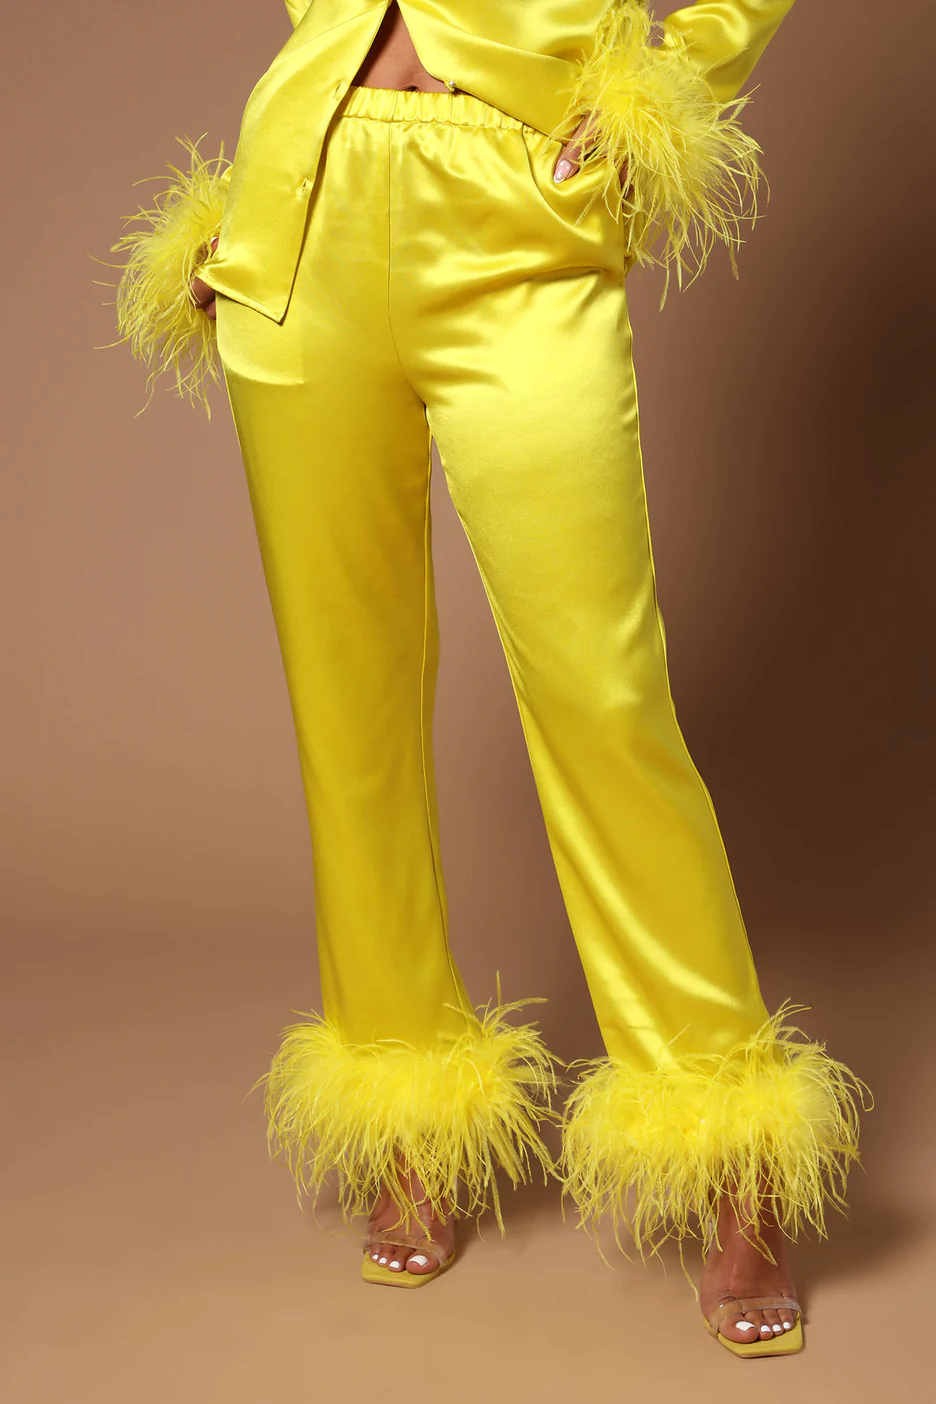 https://flyfiercefab.com/wp-content/uploads/2022/10/Fashion-Nova-Yellow-Satin-Feather-Trim-Pants.png